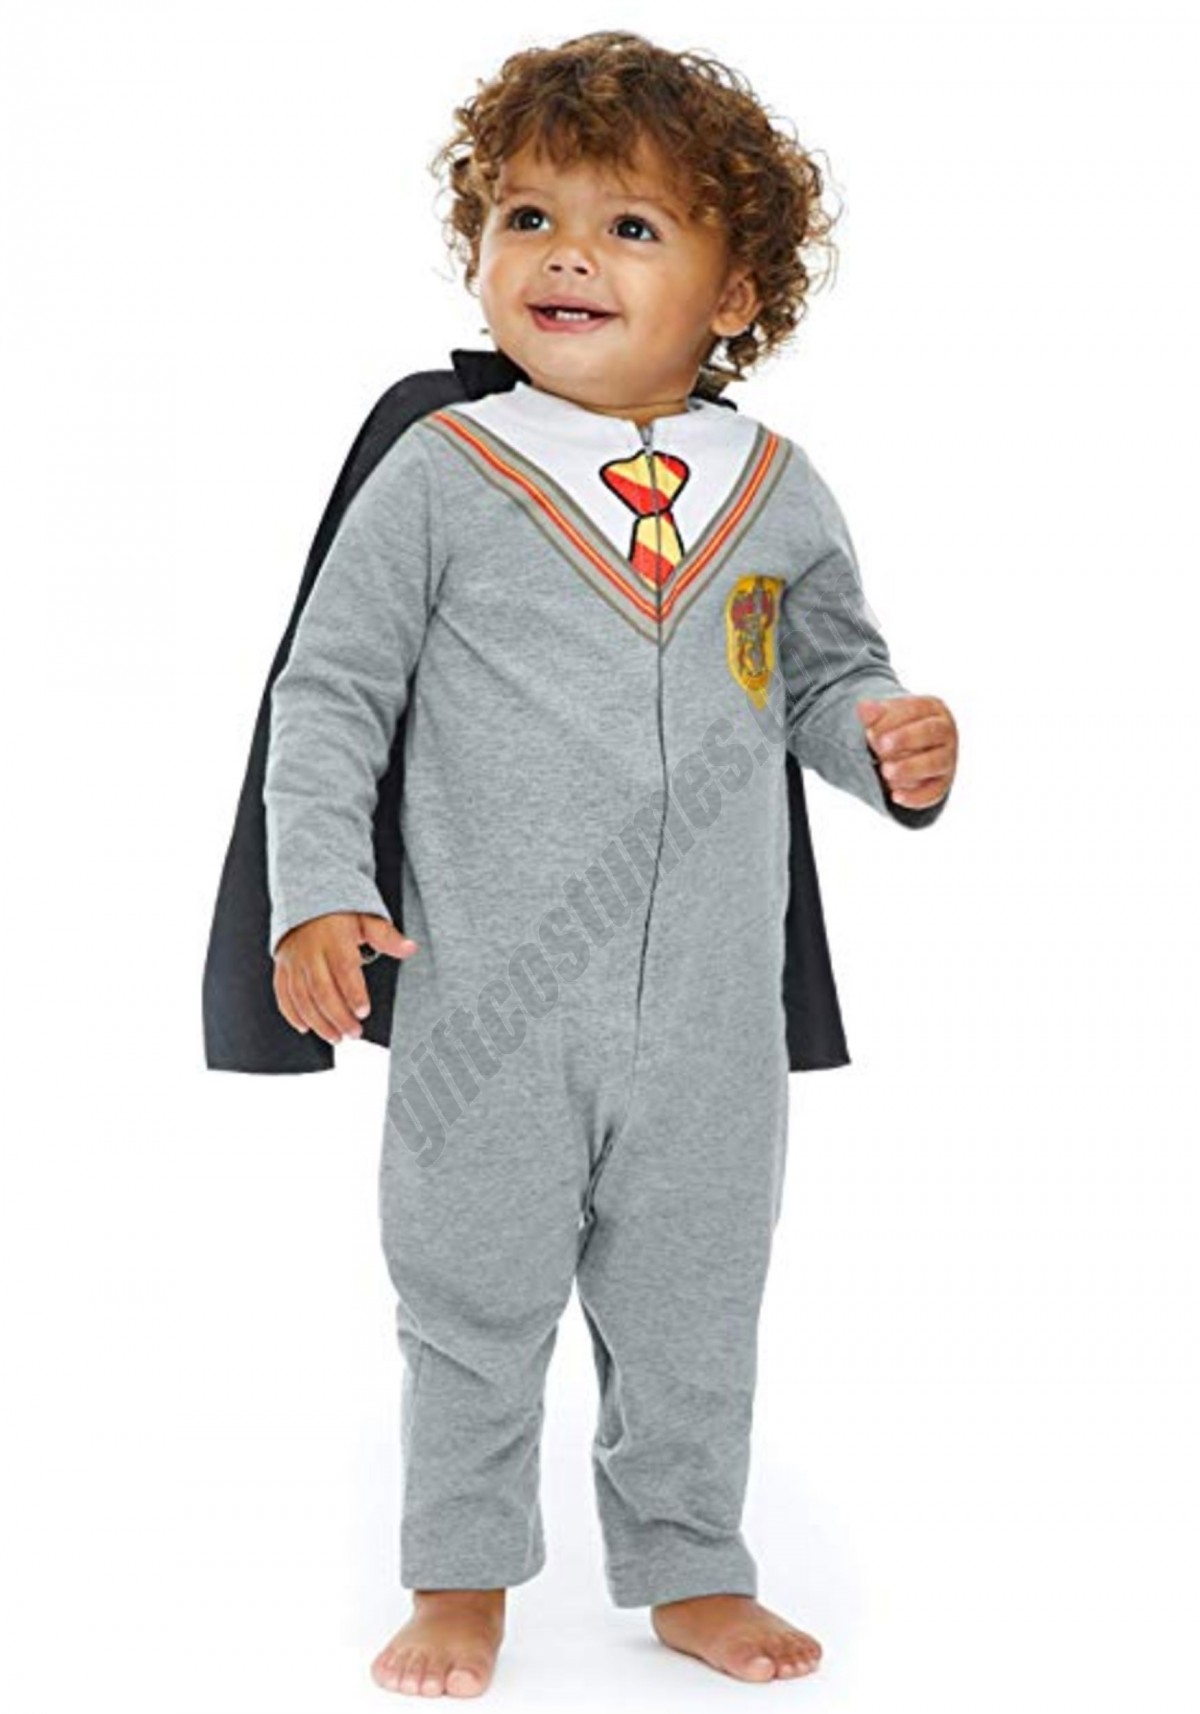 Infant Boys Harry Potter Dressup Costume Overalls Promotions - -0